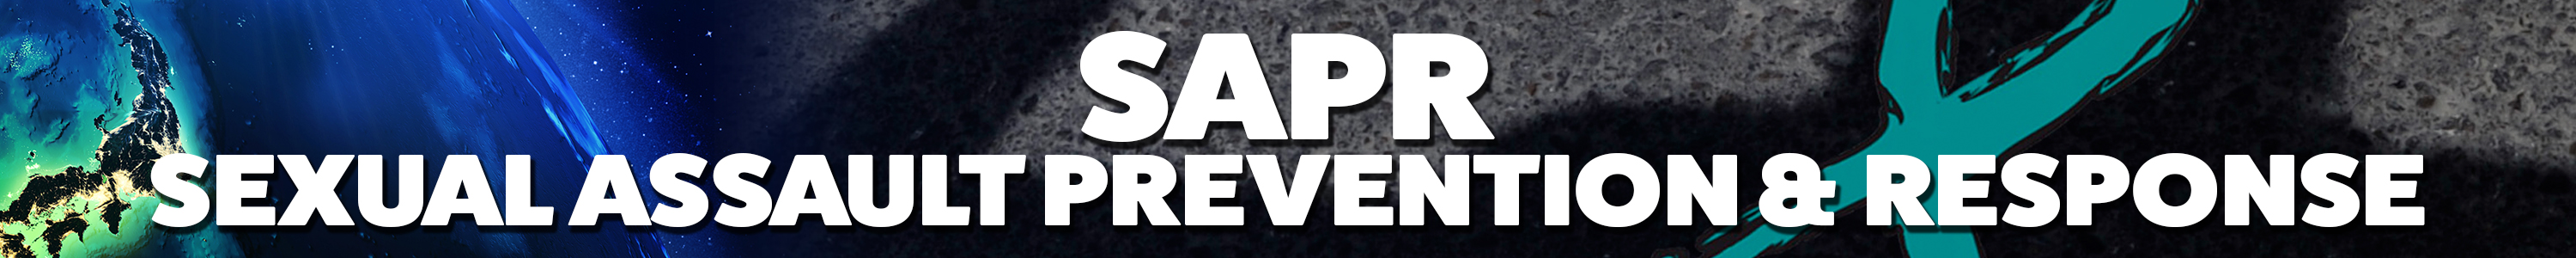 Sexual Assault Prevention & Response (SAPR)